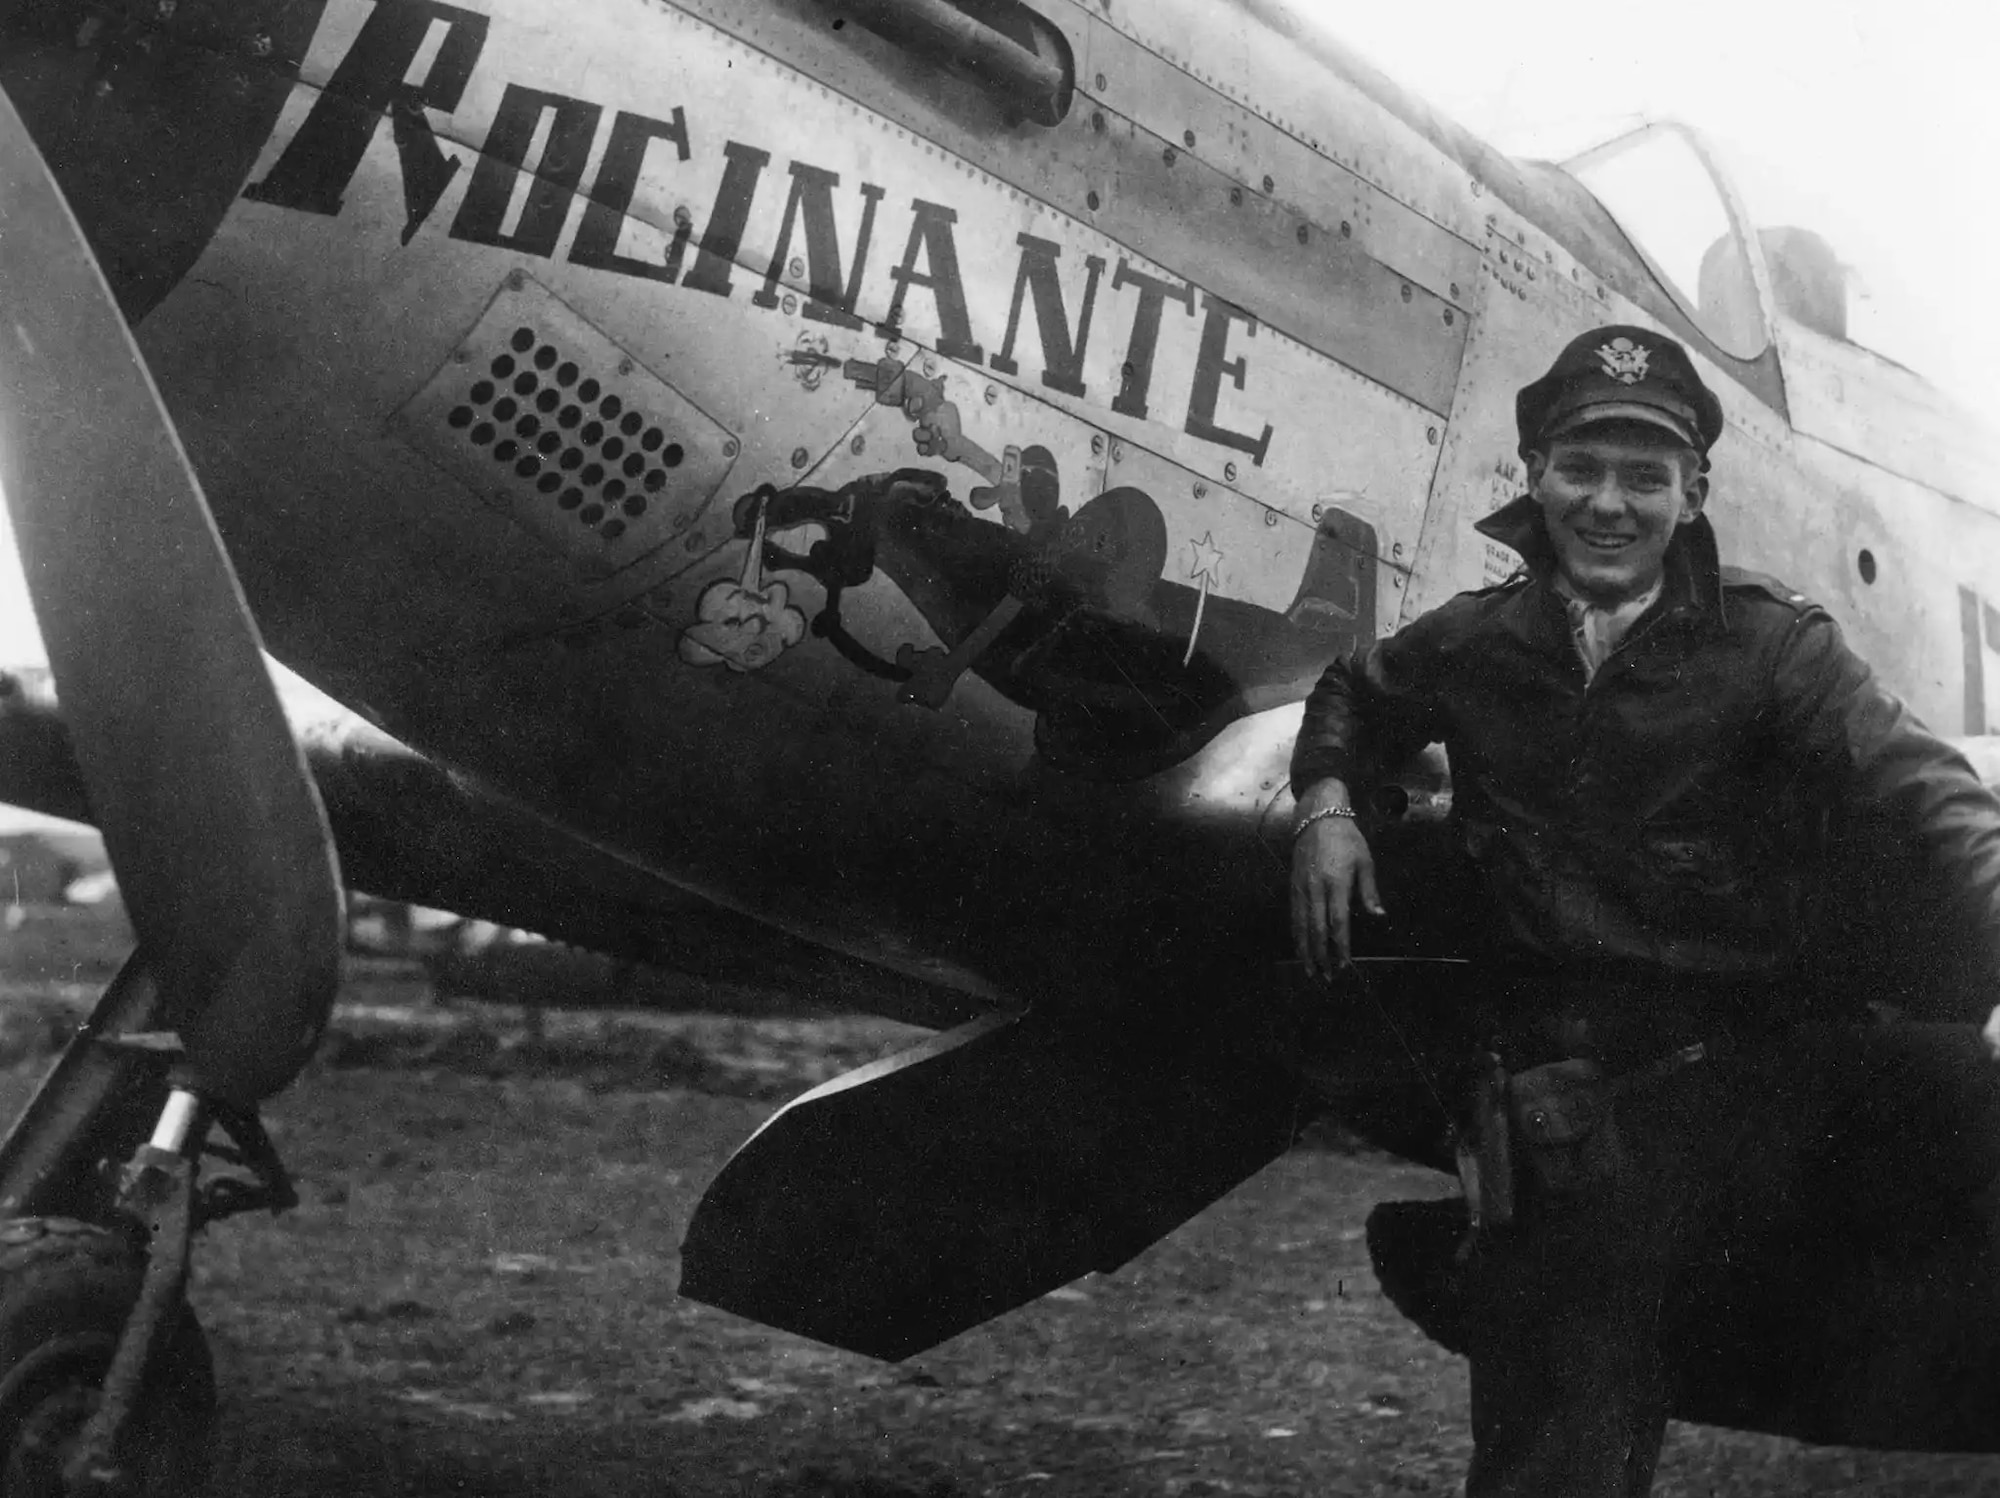 Pilot stands next to his aircraft.